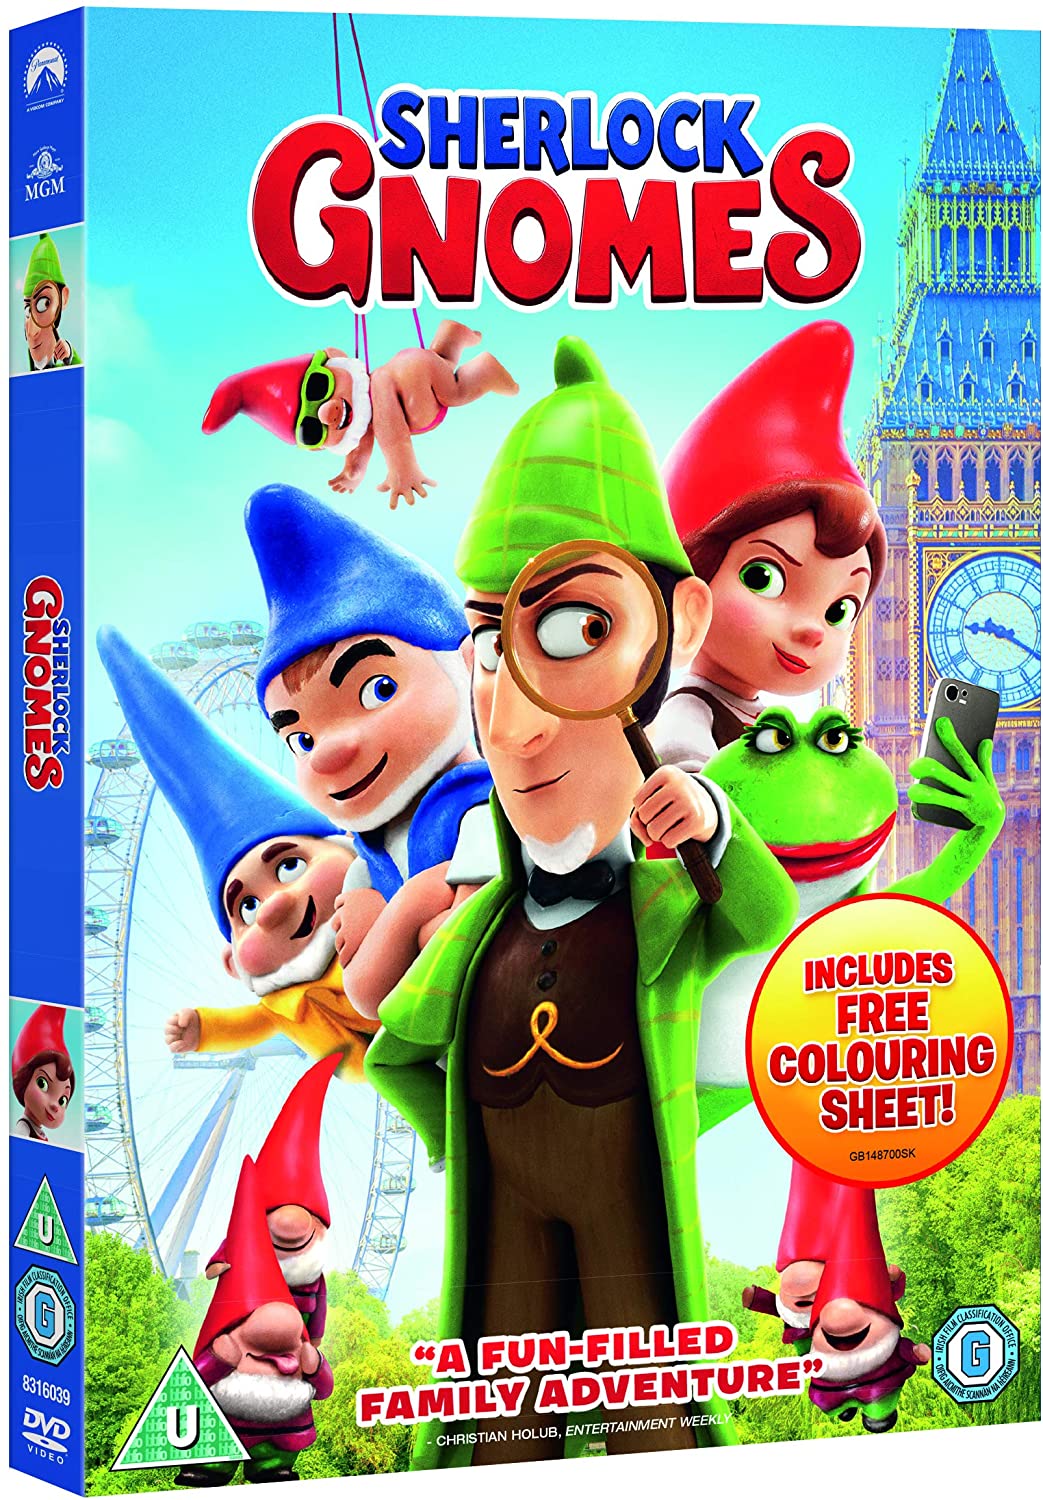 Sherlock Gnomes - Mystery/Comedy [DVD]